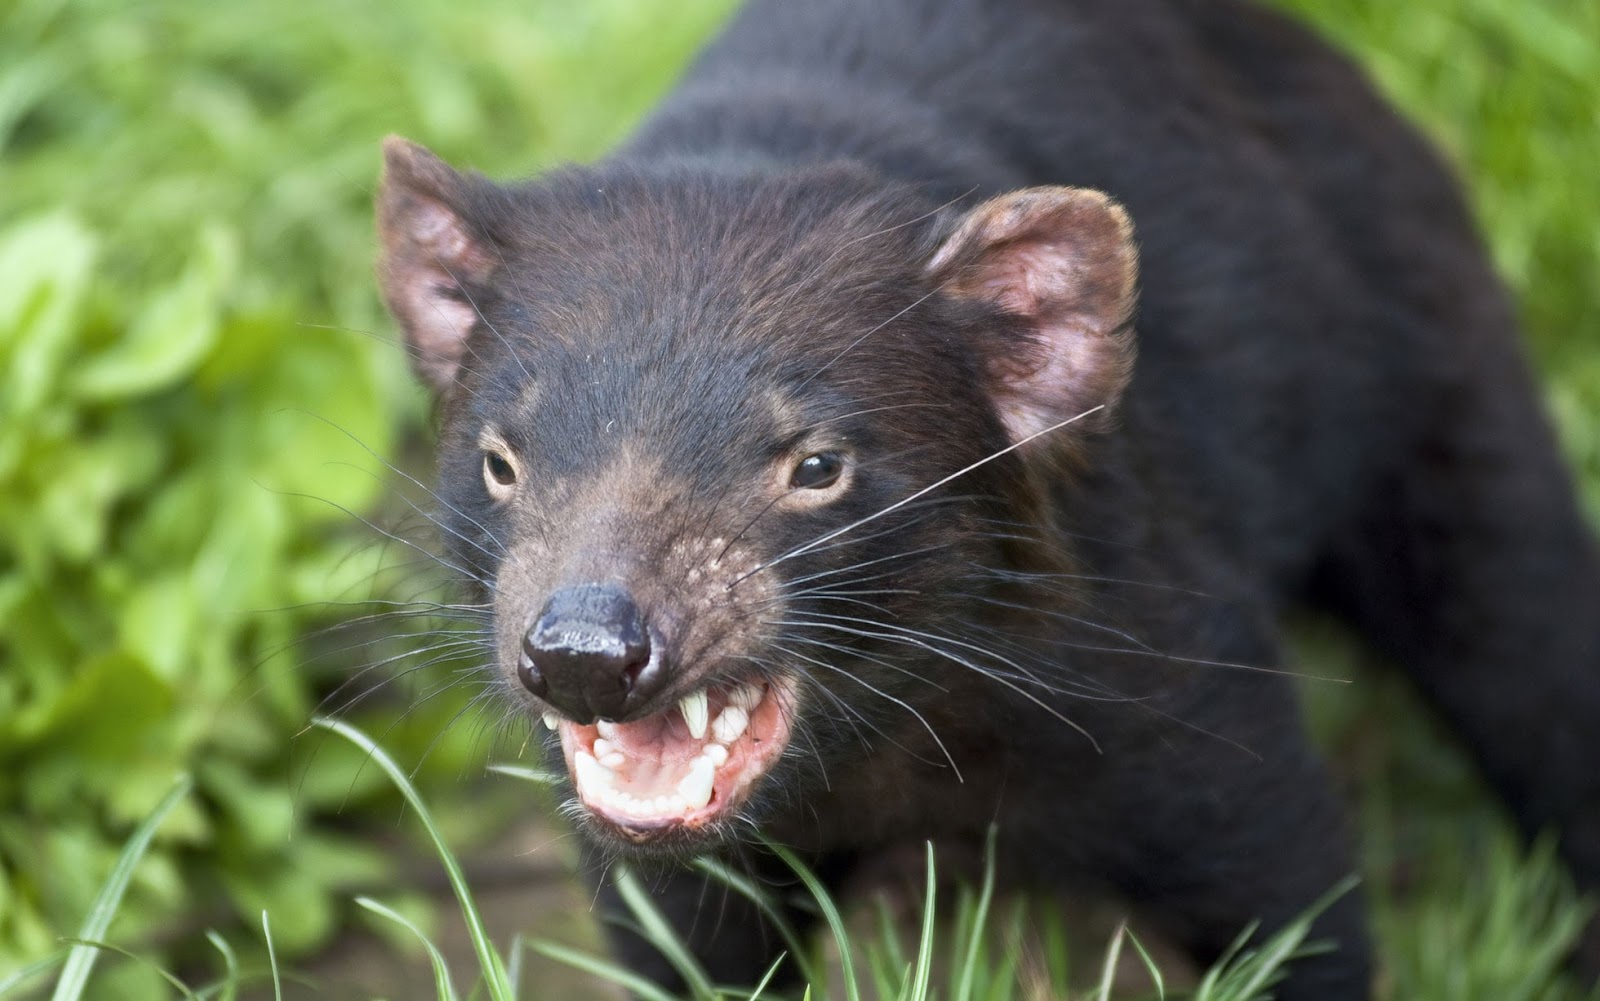 A Tasmanian devil baring its teeth in its natural habitat.